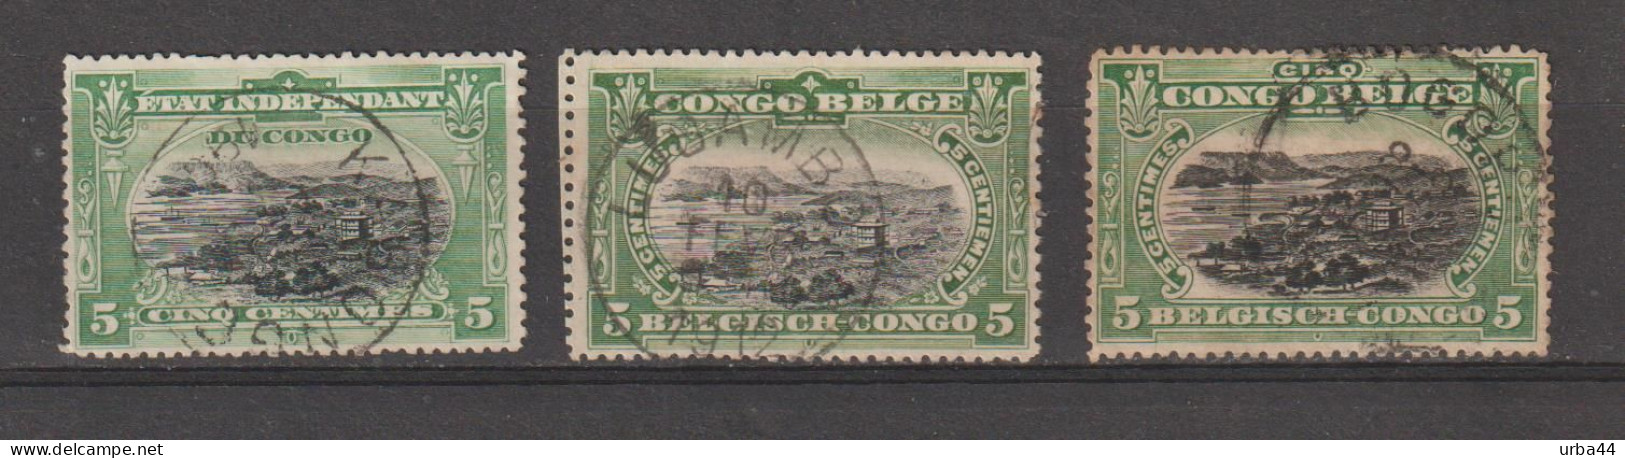 Congo Belge Oblitération 5 Ct - Gebraucht